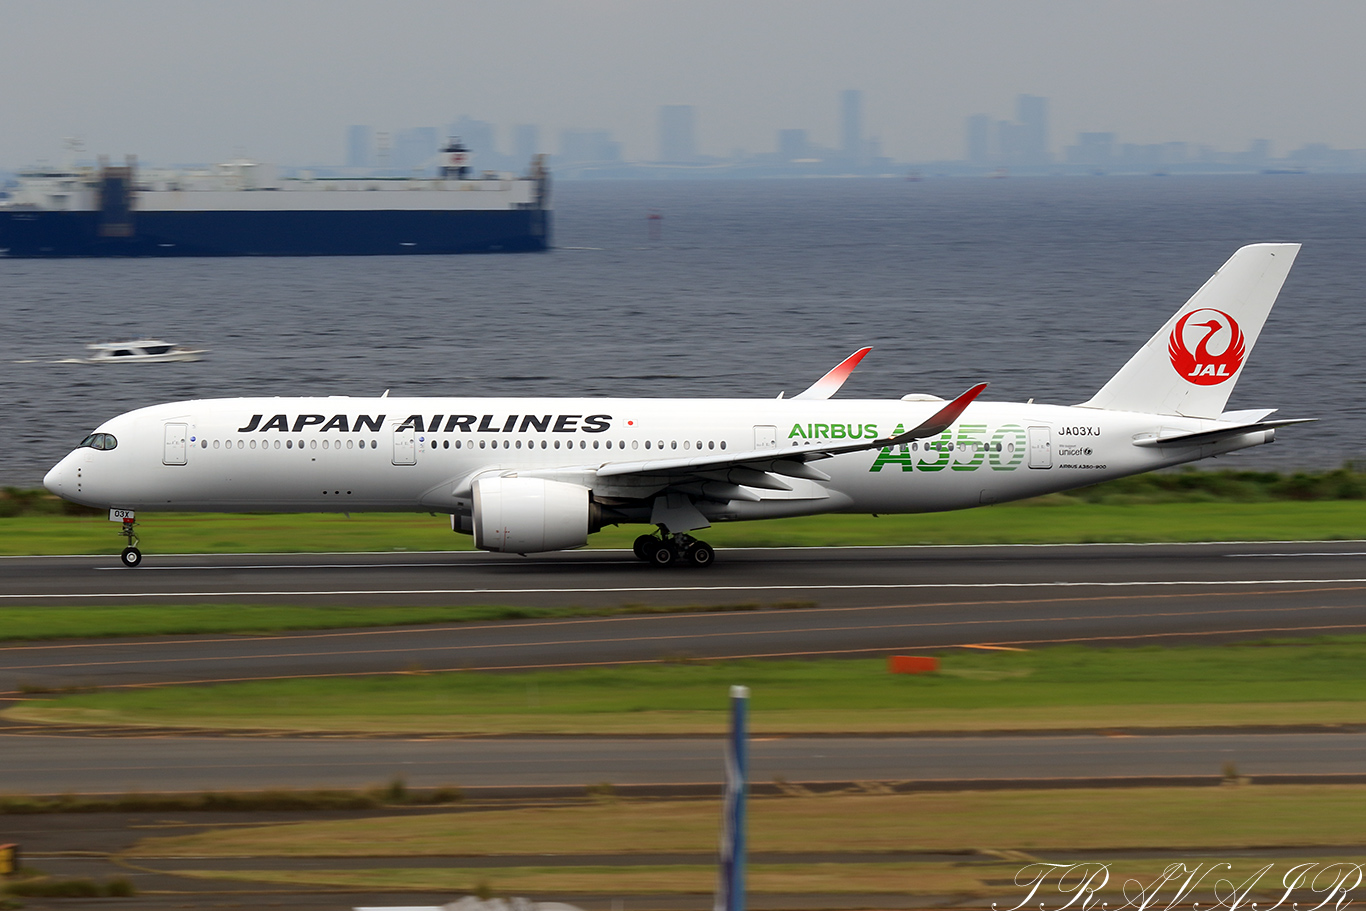 JL/JAL/日本航空 JL515 A350-900 JA03XJ